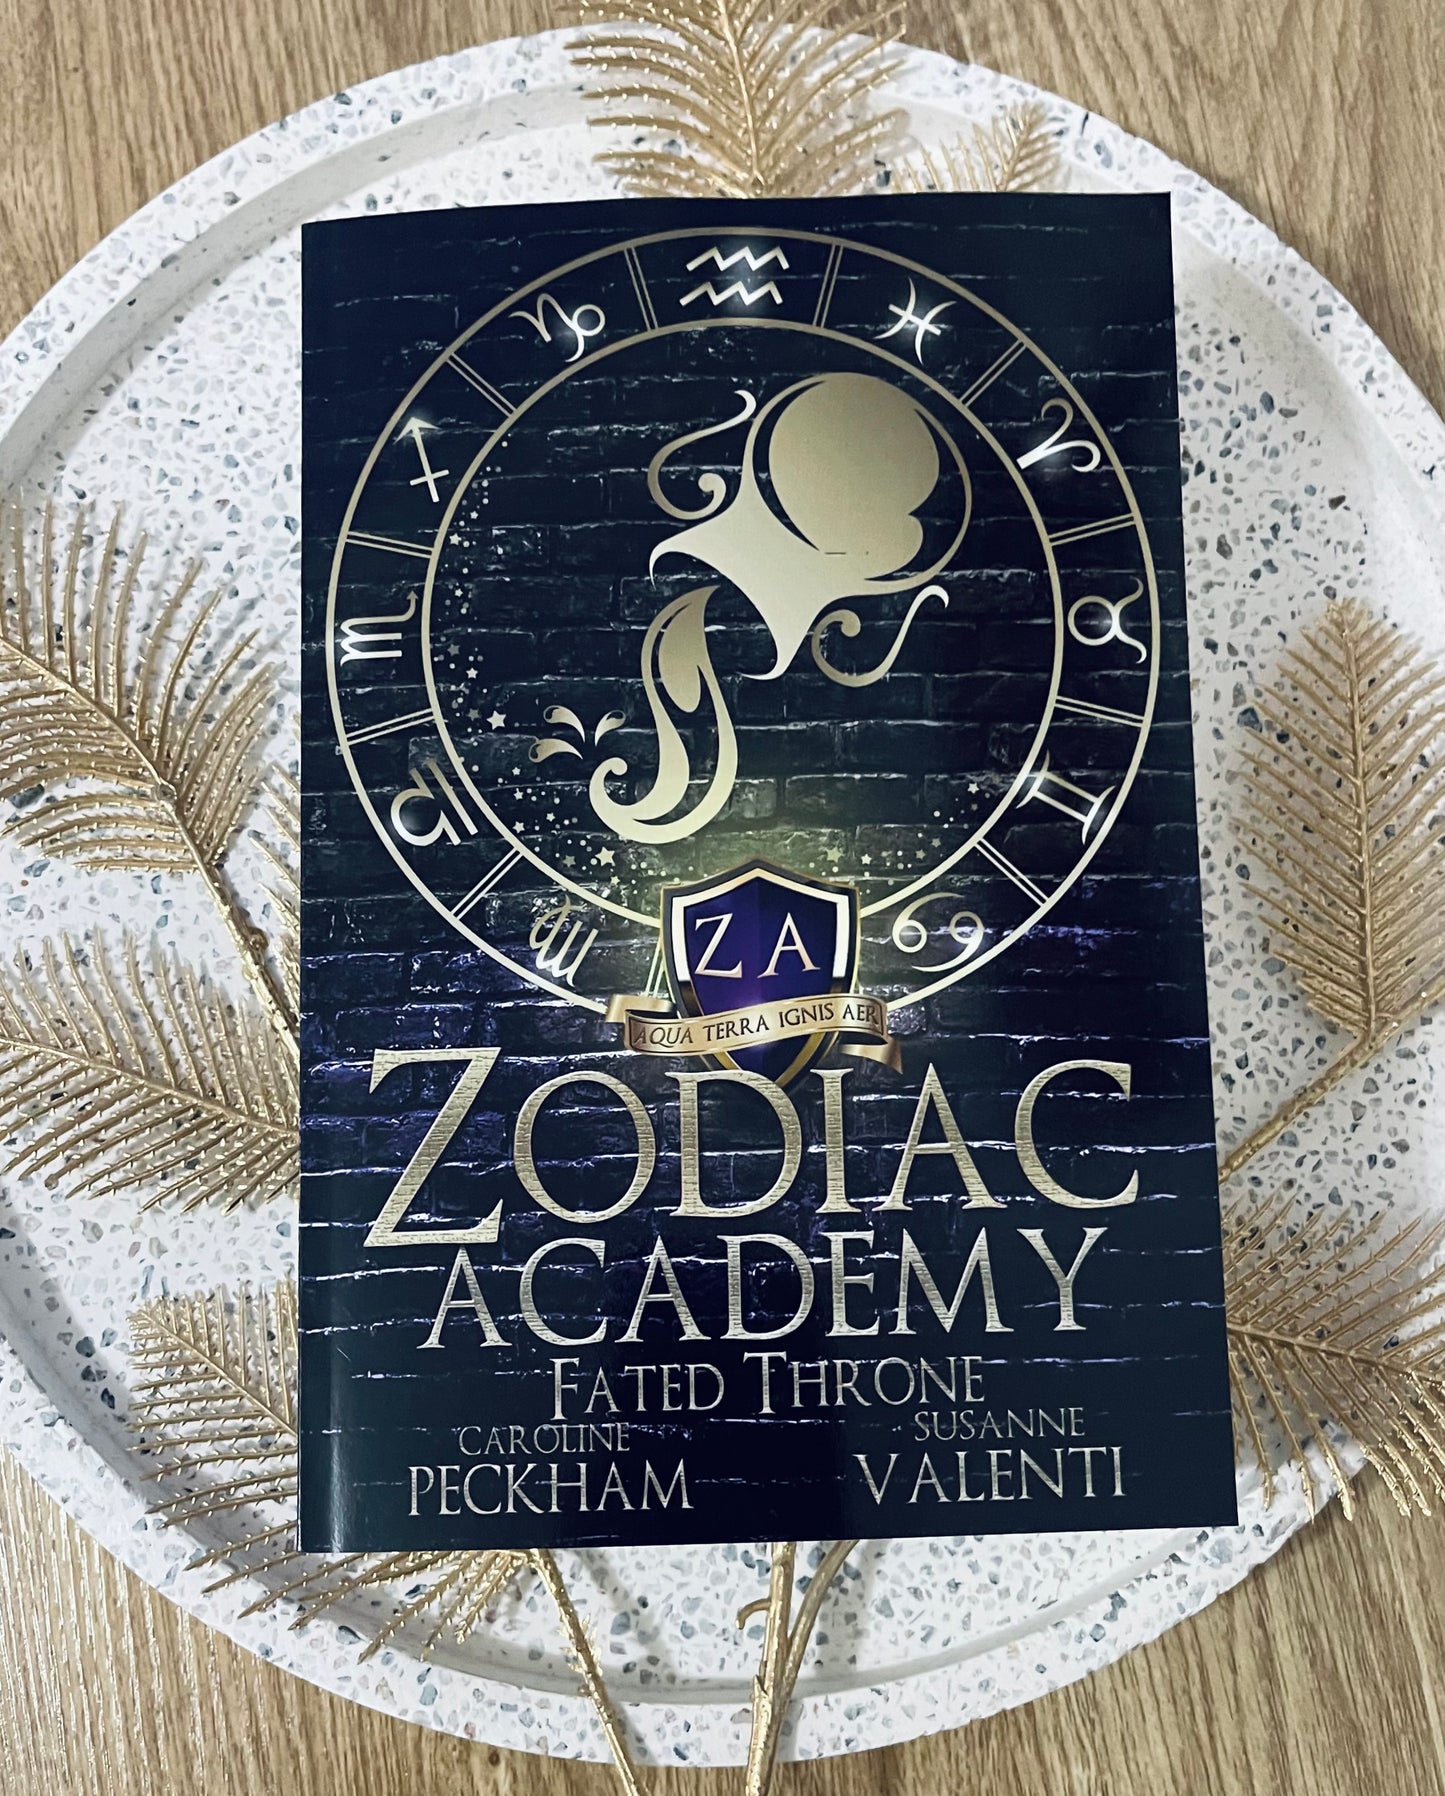 Fated Throne by Caroline Peckham & Susanne Valenti (Zodiac Academy book 6 )